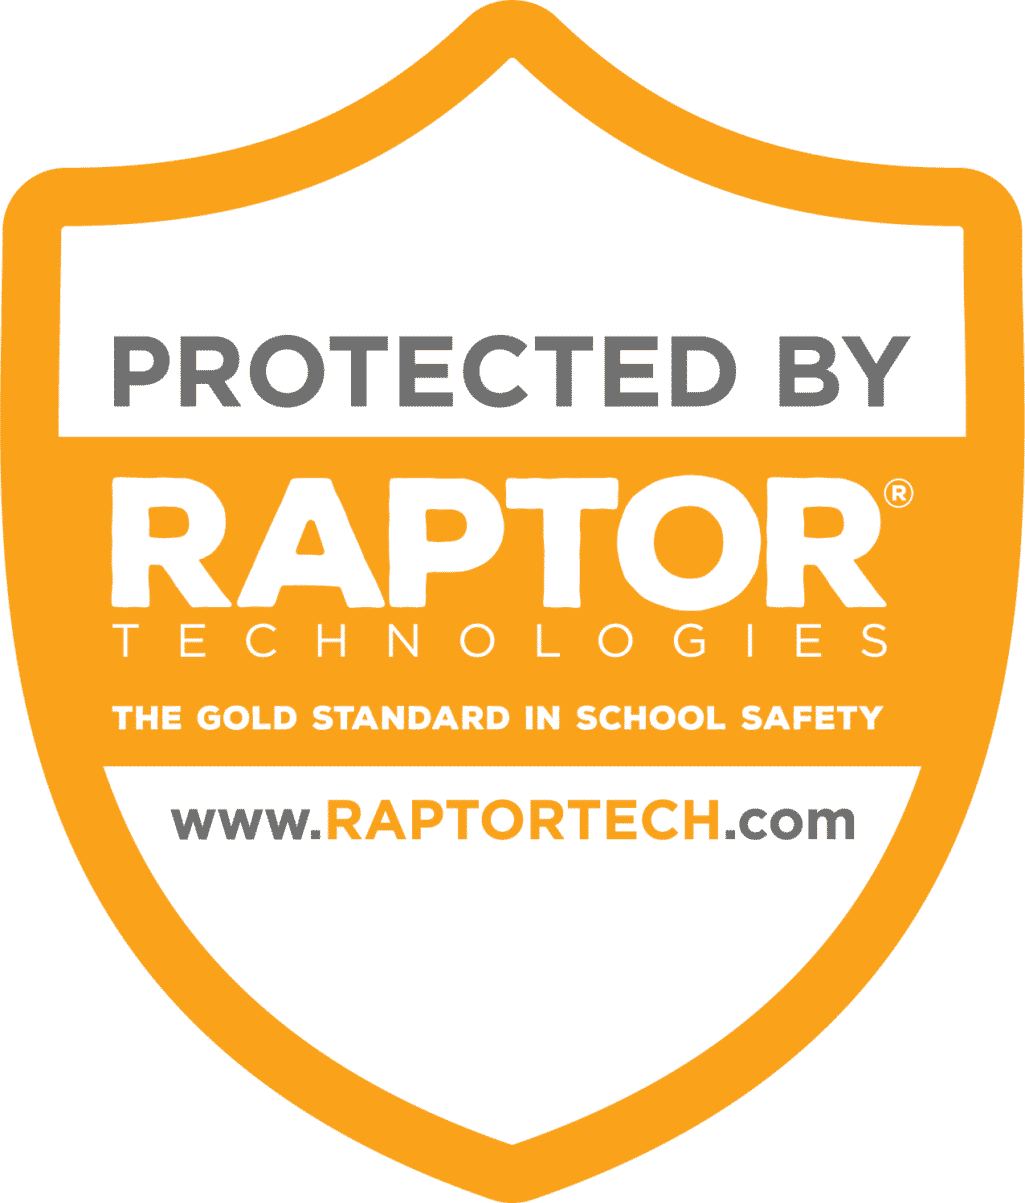 Raptor Technologies security system